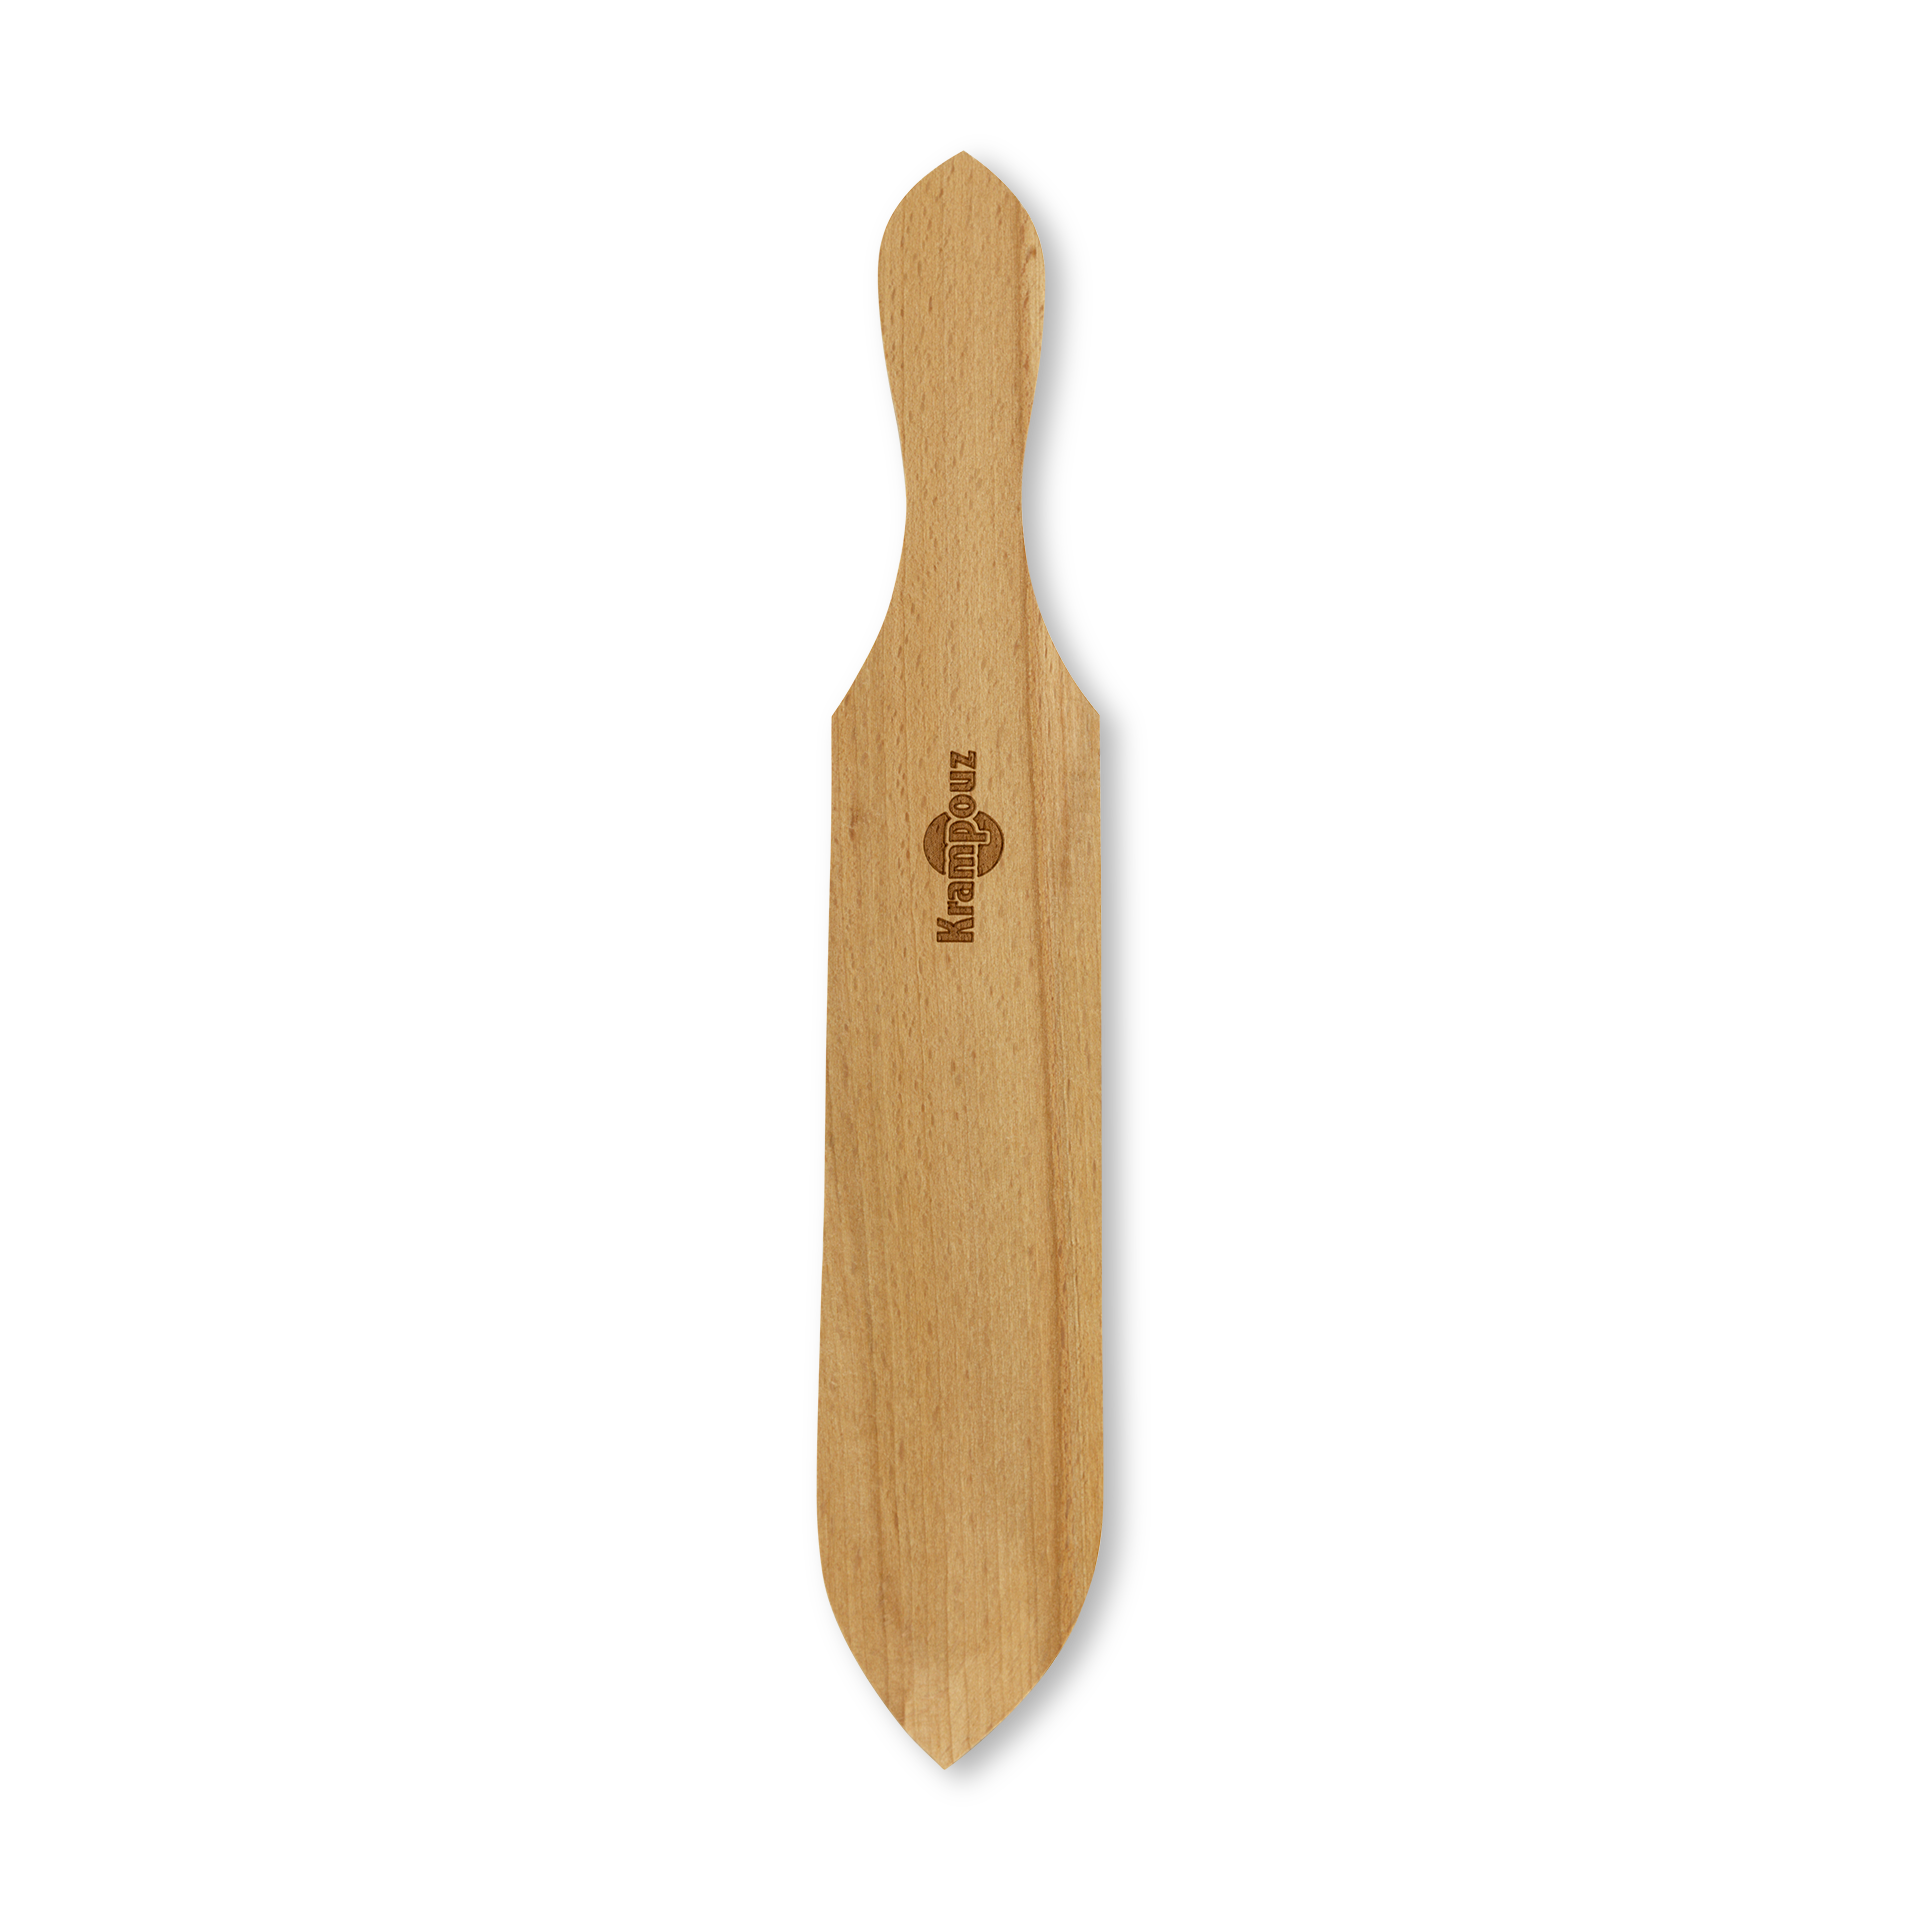 Wooden crepe spatula  Krampouz professional